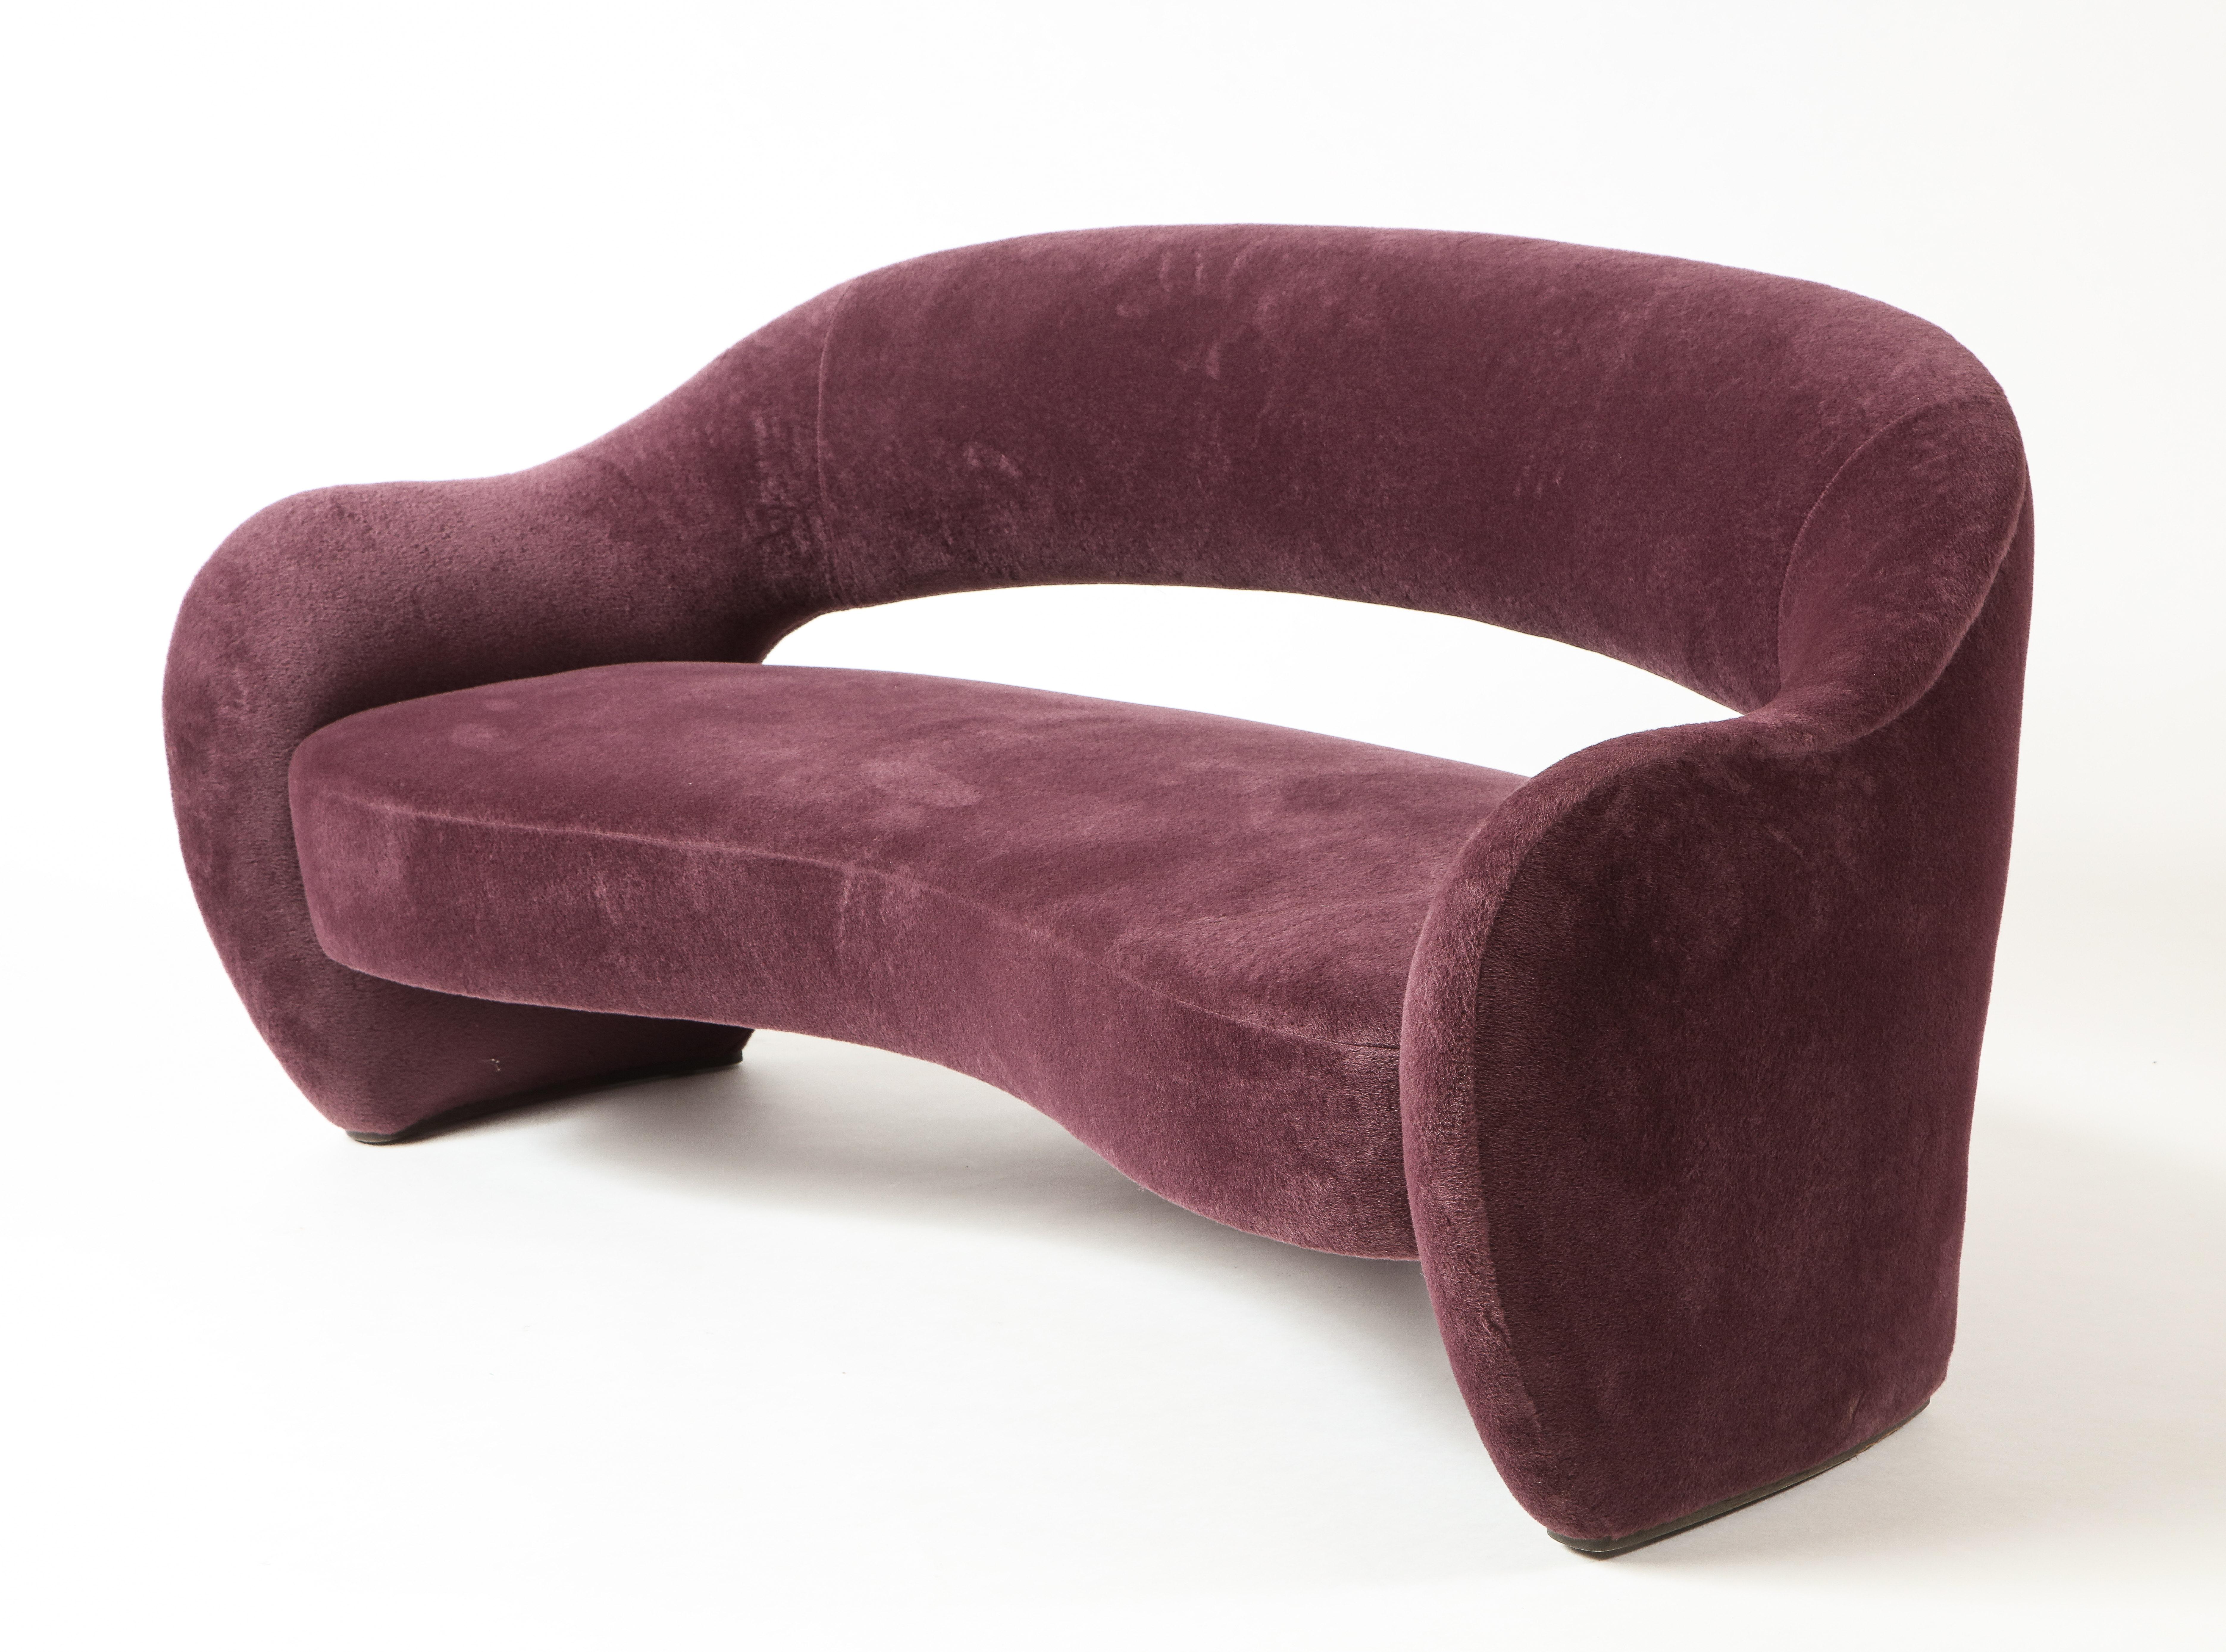 Vladamir Kagan Wysiwyg love seat with purple upholstery & walnut ebony base

Additional information:
Materials: Walnut, upholstery 
Finish: Ebony
Dimension: 71 W x 44 D x 35 H inch
Seat height: 17.5 inch